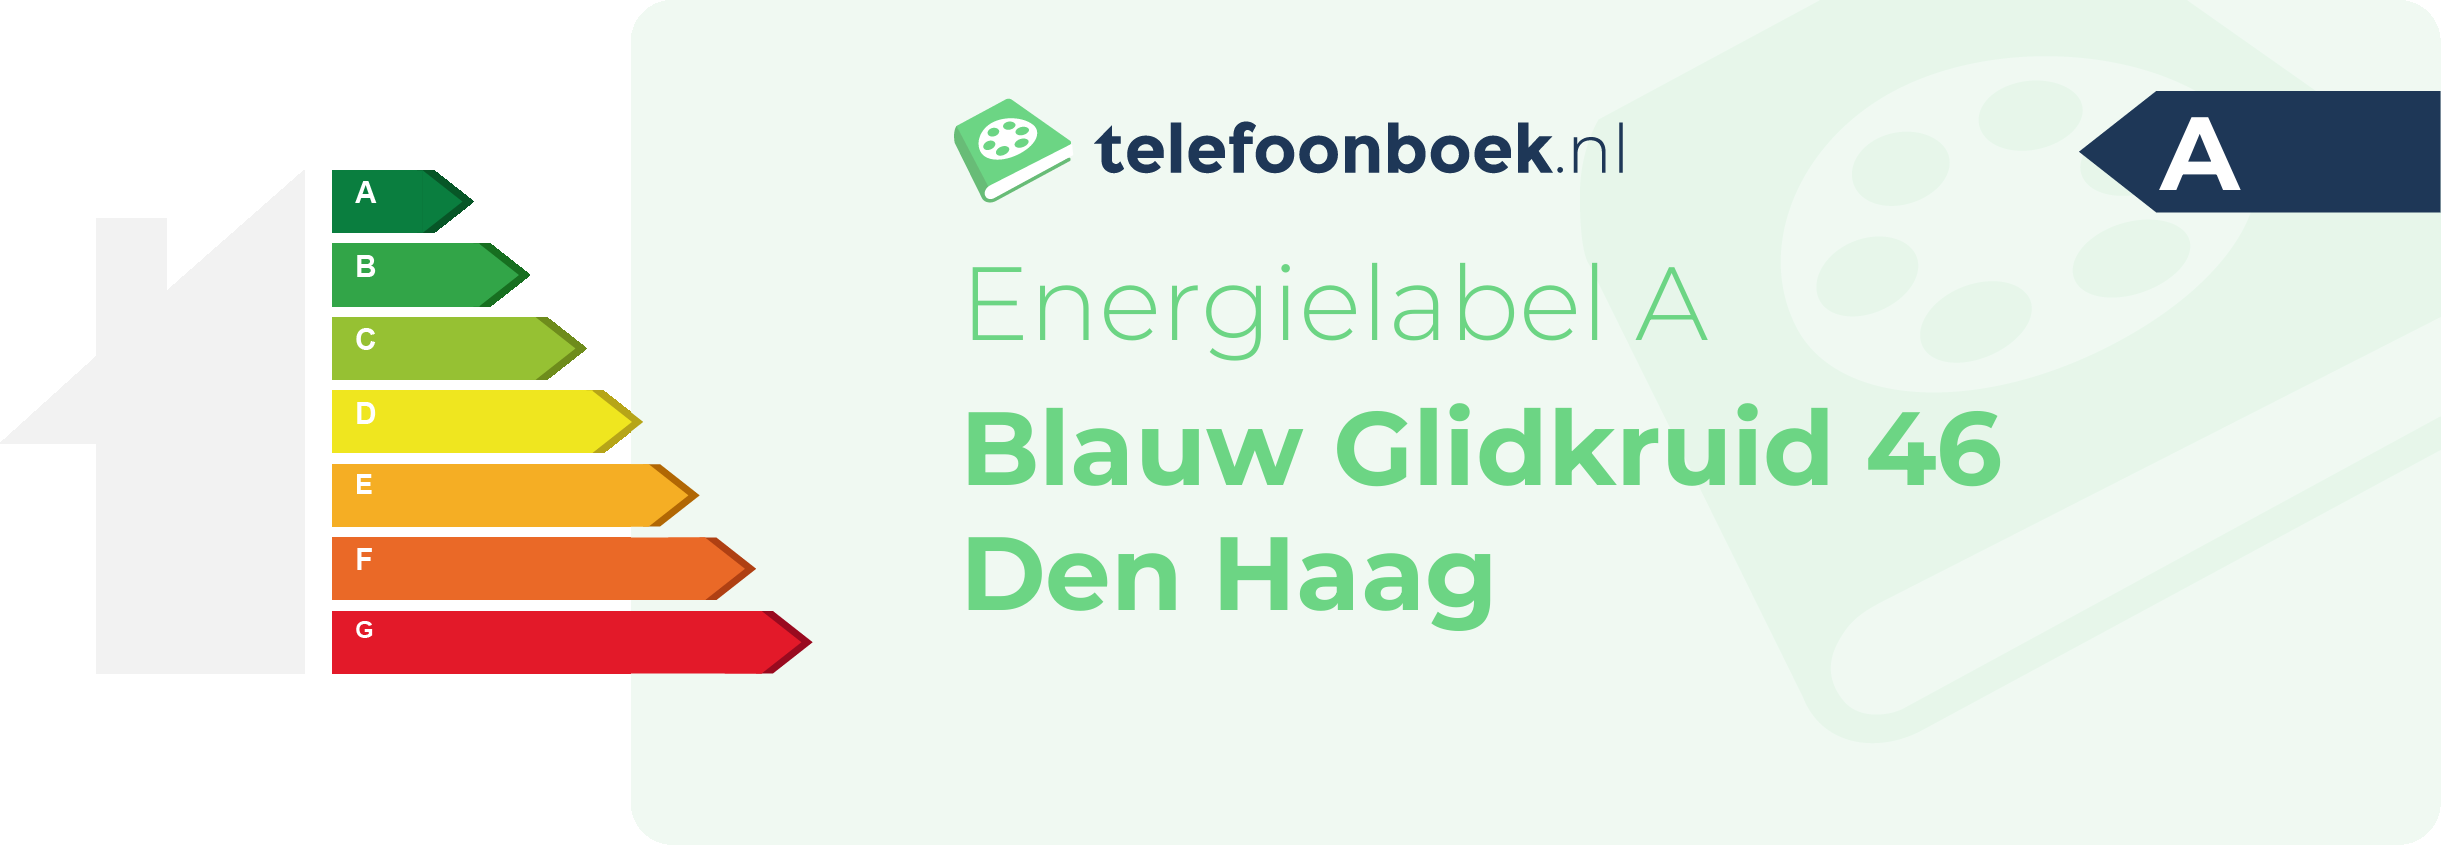 Energielabel Blauw Glidkruid 46 Den Haag